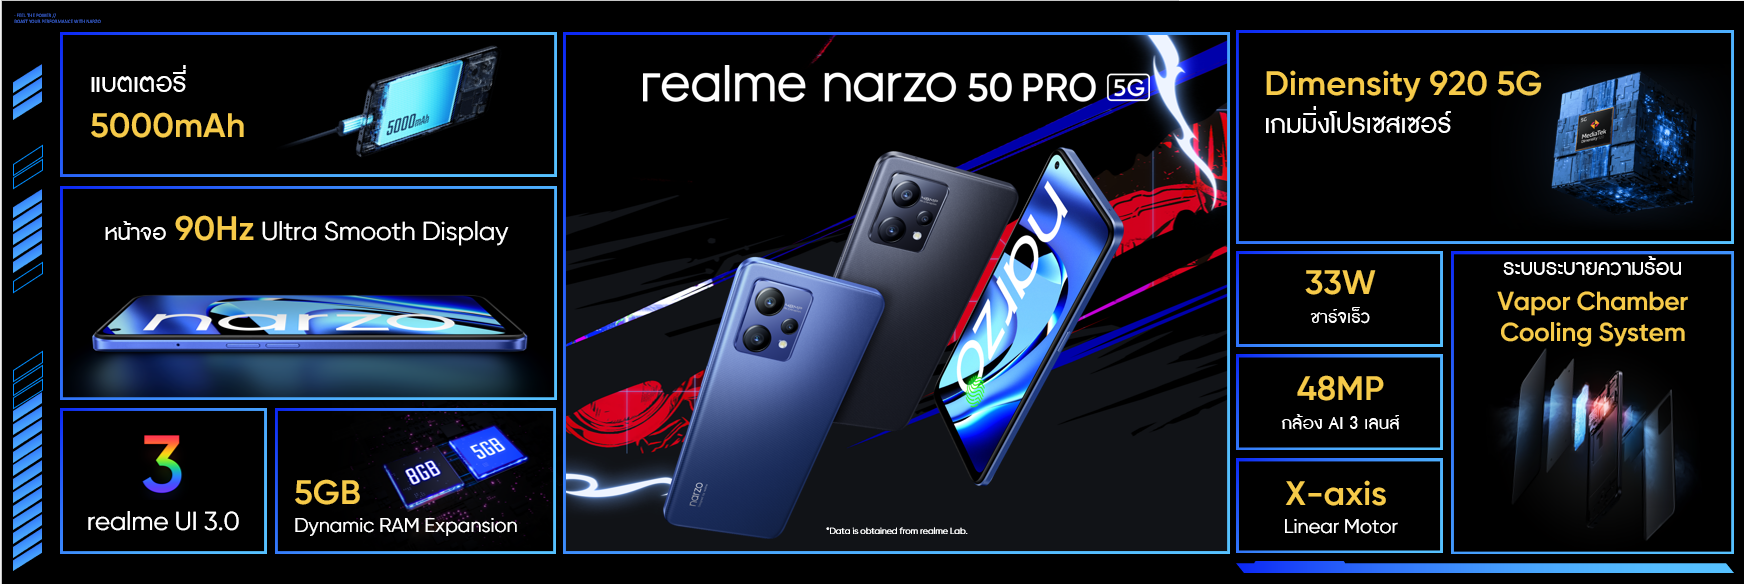 realme-narzo-50-Pro-5G 03